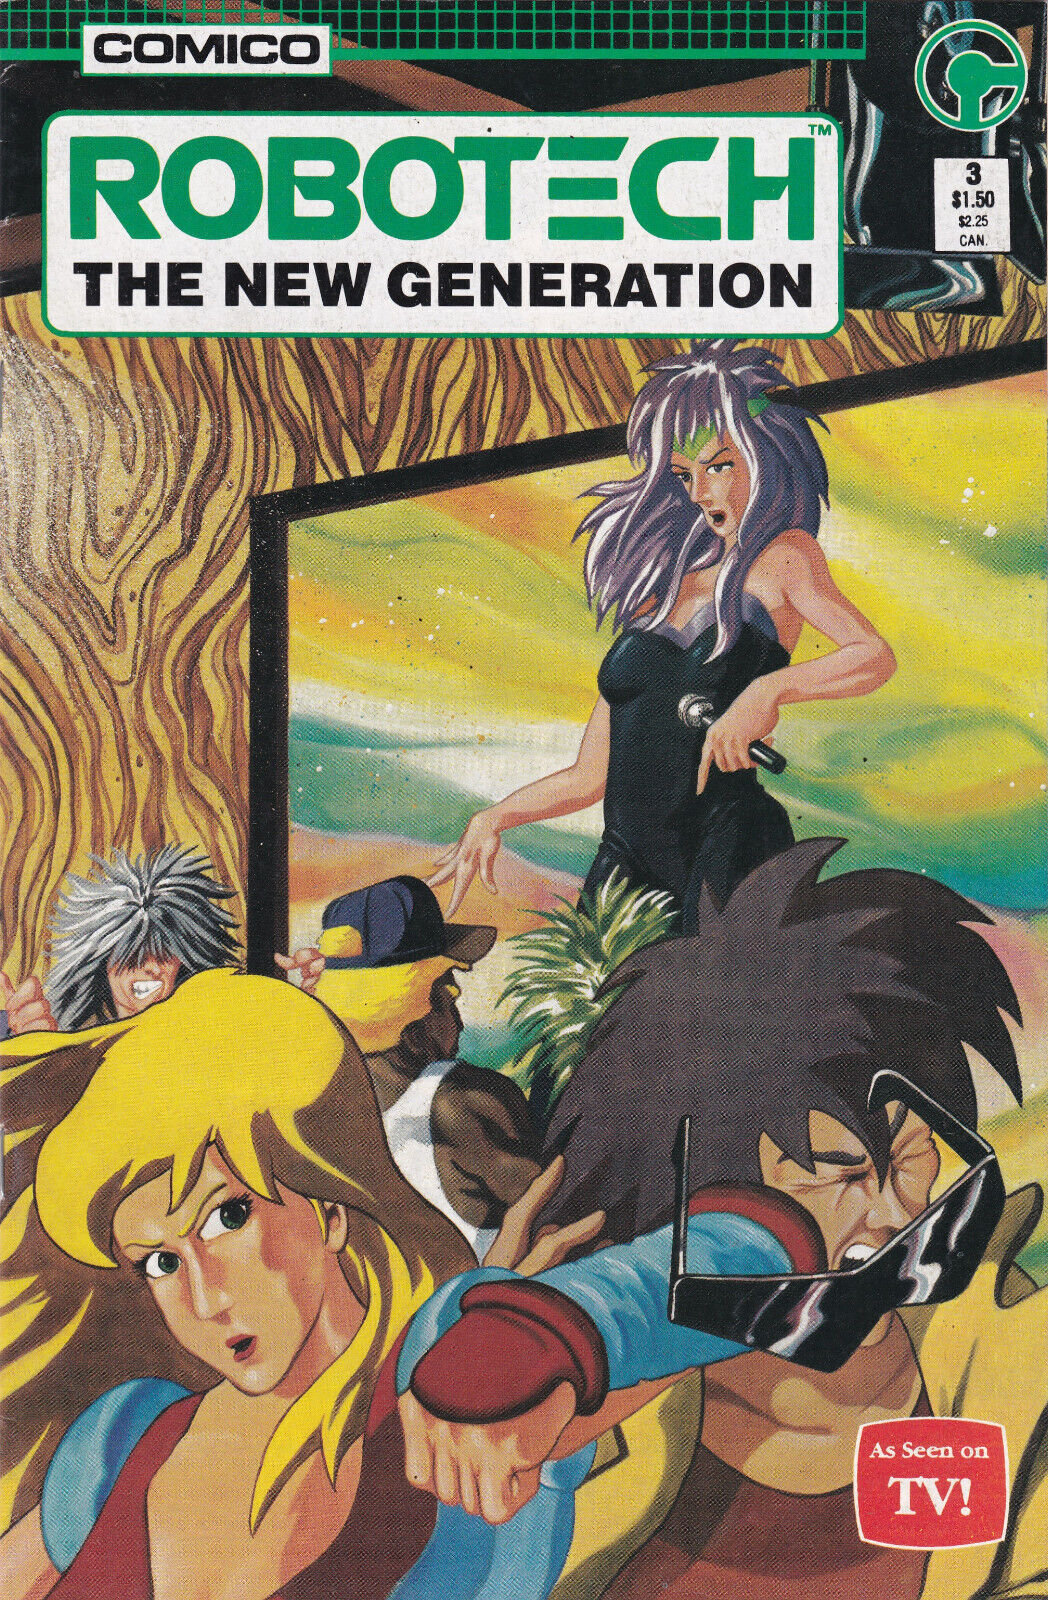 Robotech: The New Generation #3, (1985-1988) Comico, High Grade